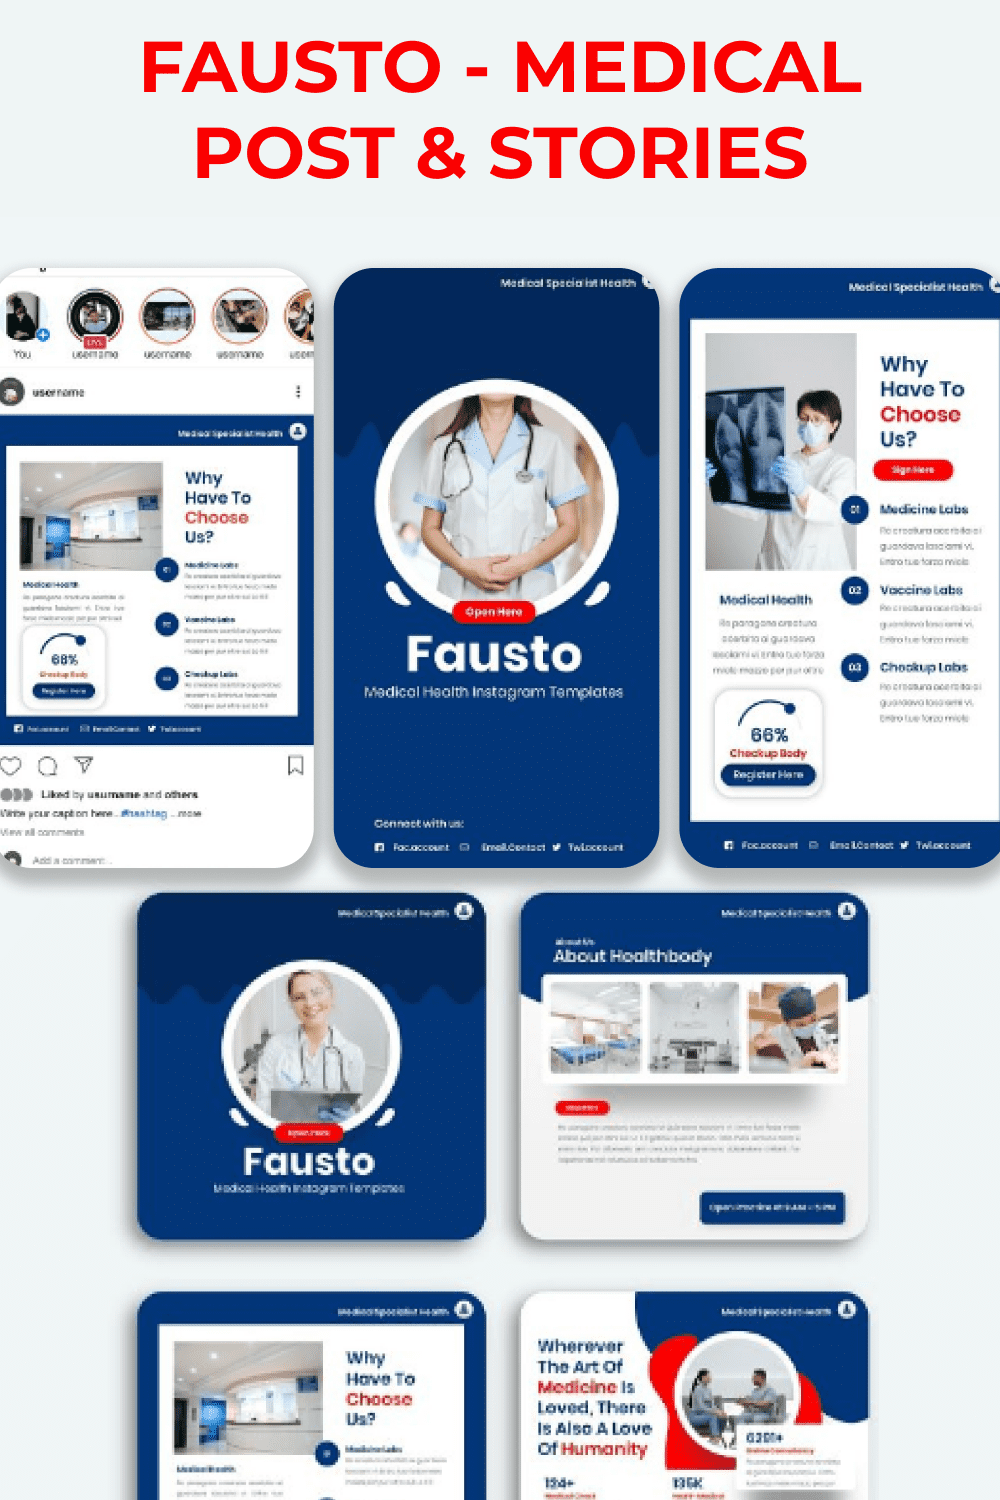 Fausto - Medical Post & Stories Pinterest.